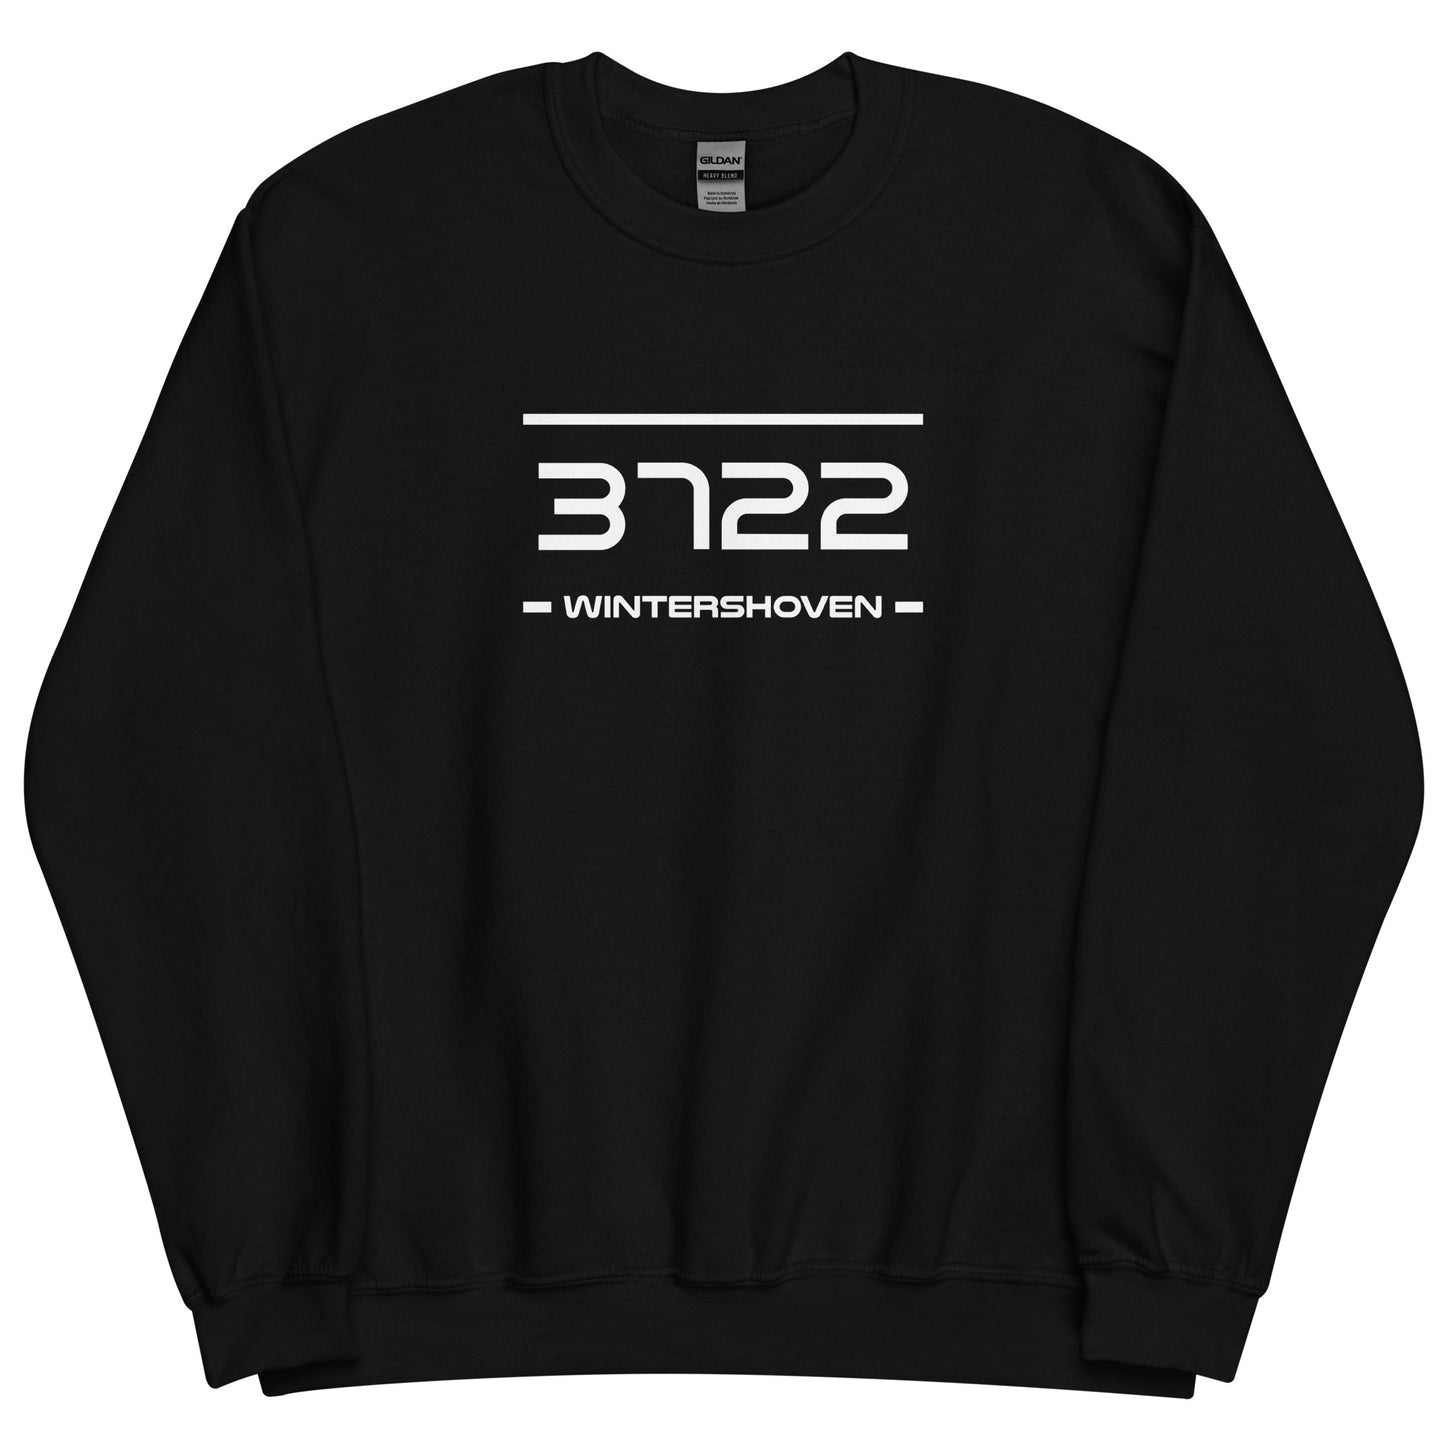 Sweater - 3722 - Wintershoven (M/V)